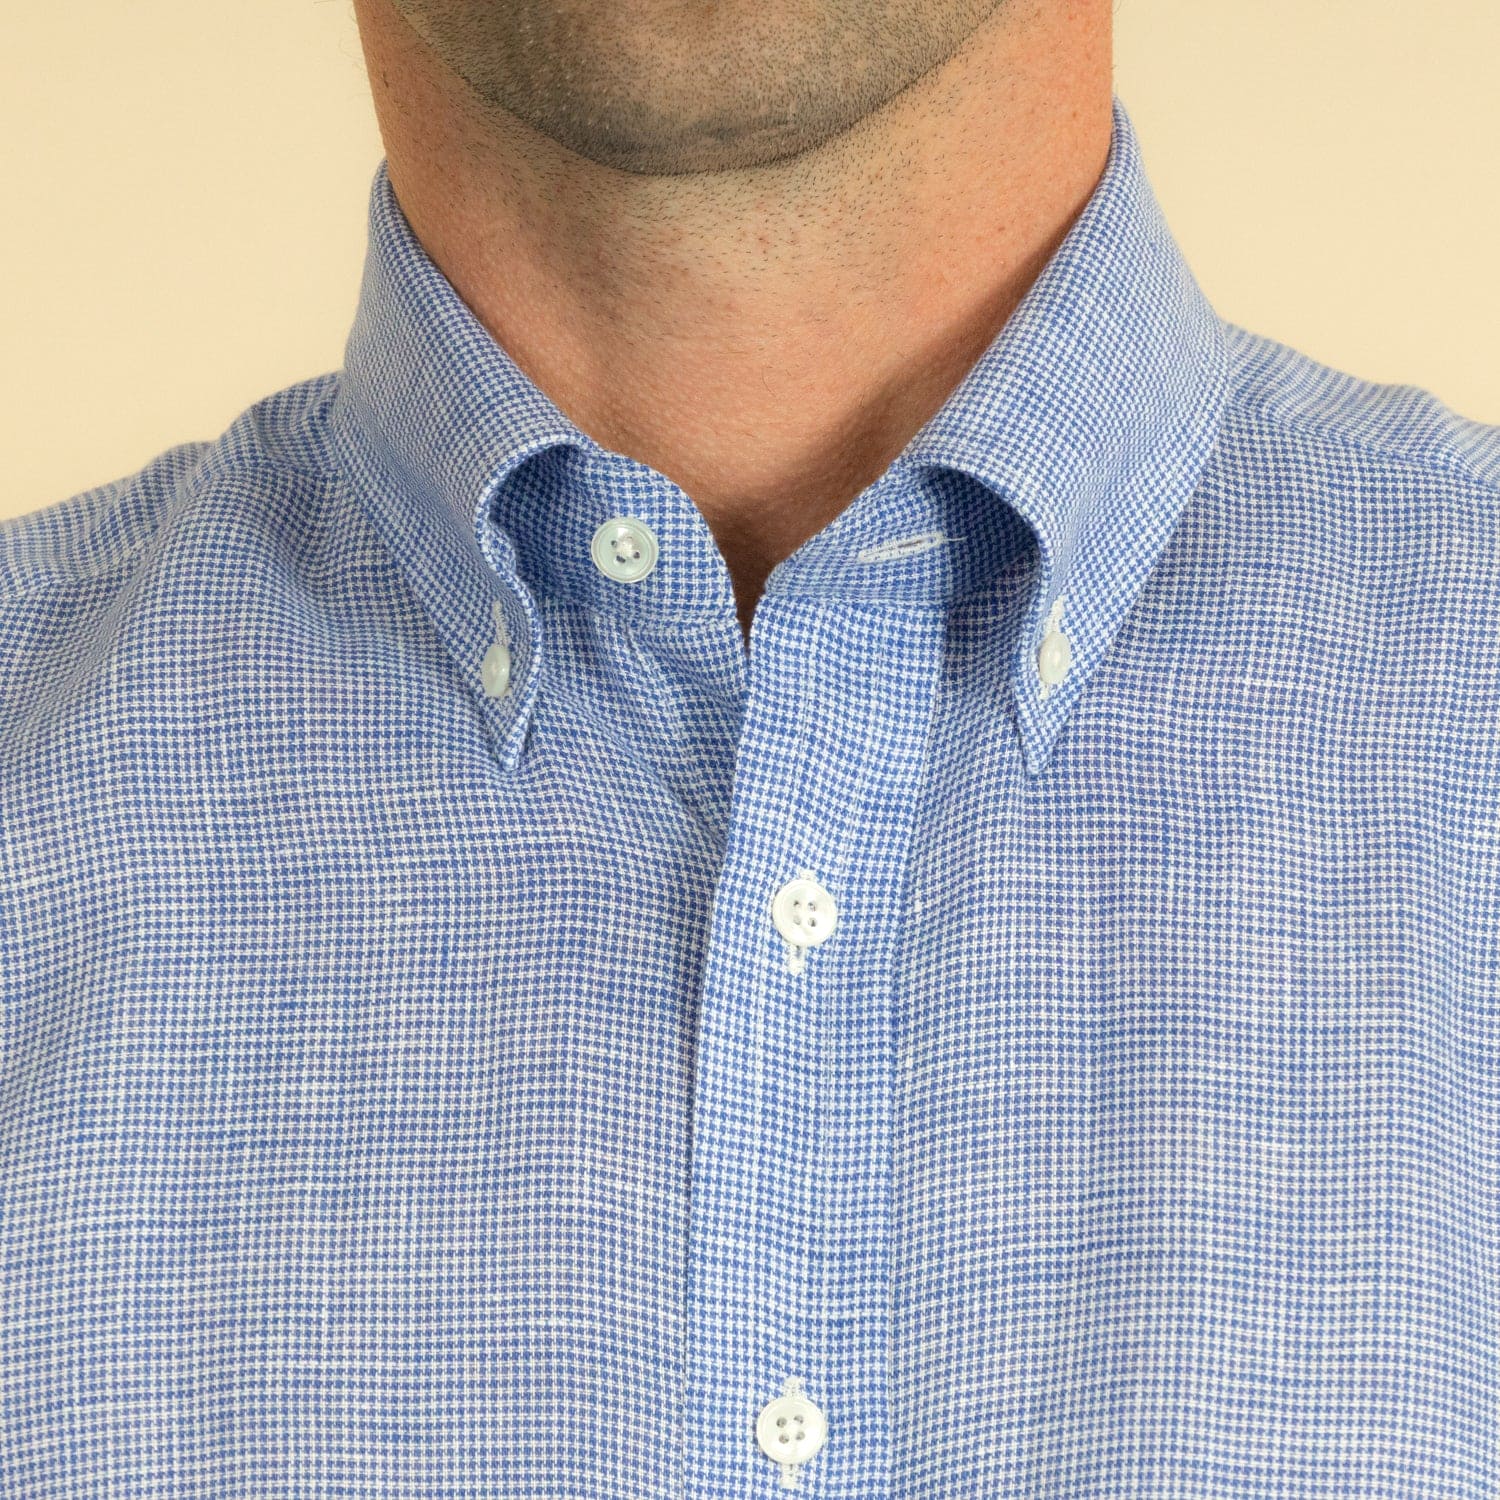 Contemporary Fit, Button Down Collar, 2 Button Cuff Shirt in Plain Navy Houndstooth Linen